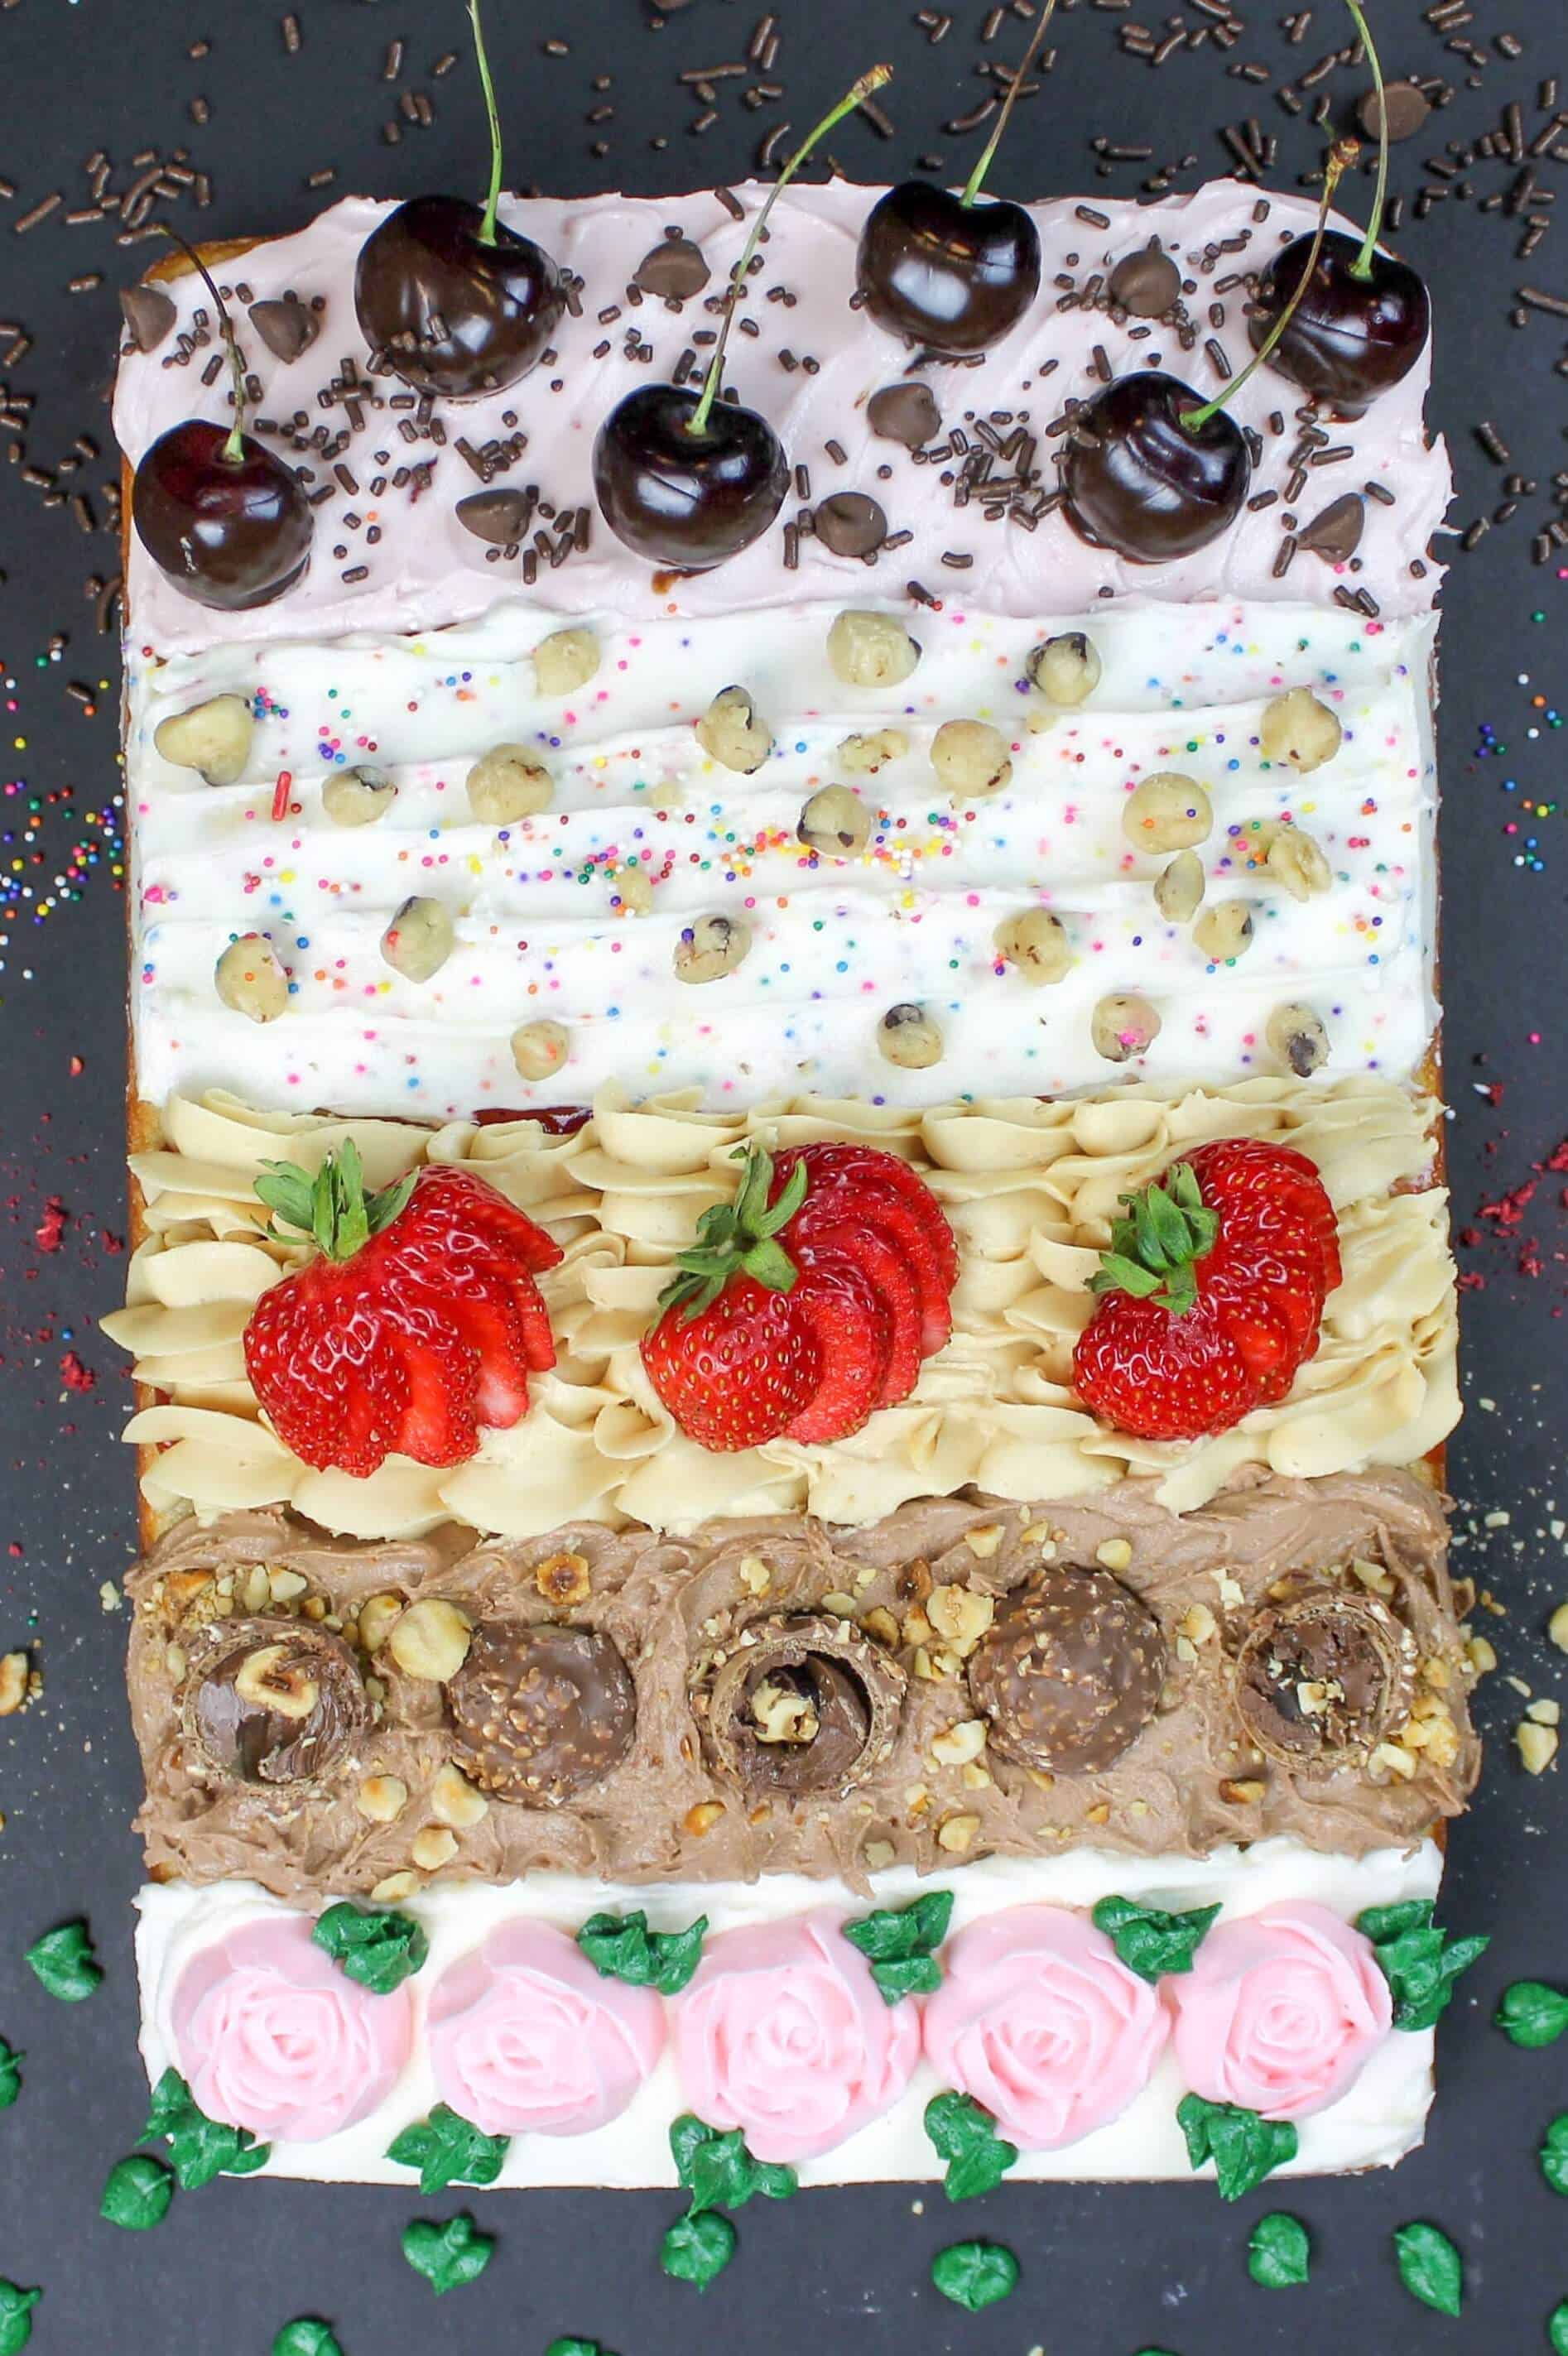 Disney Princess Custom Cake - La Bon Bake Shoppes